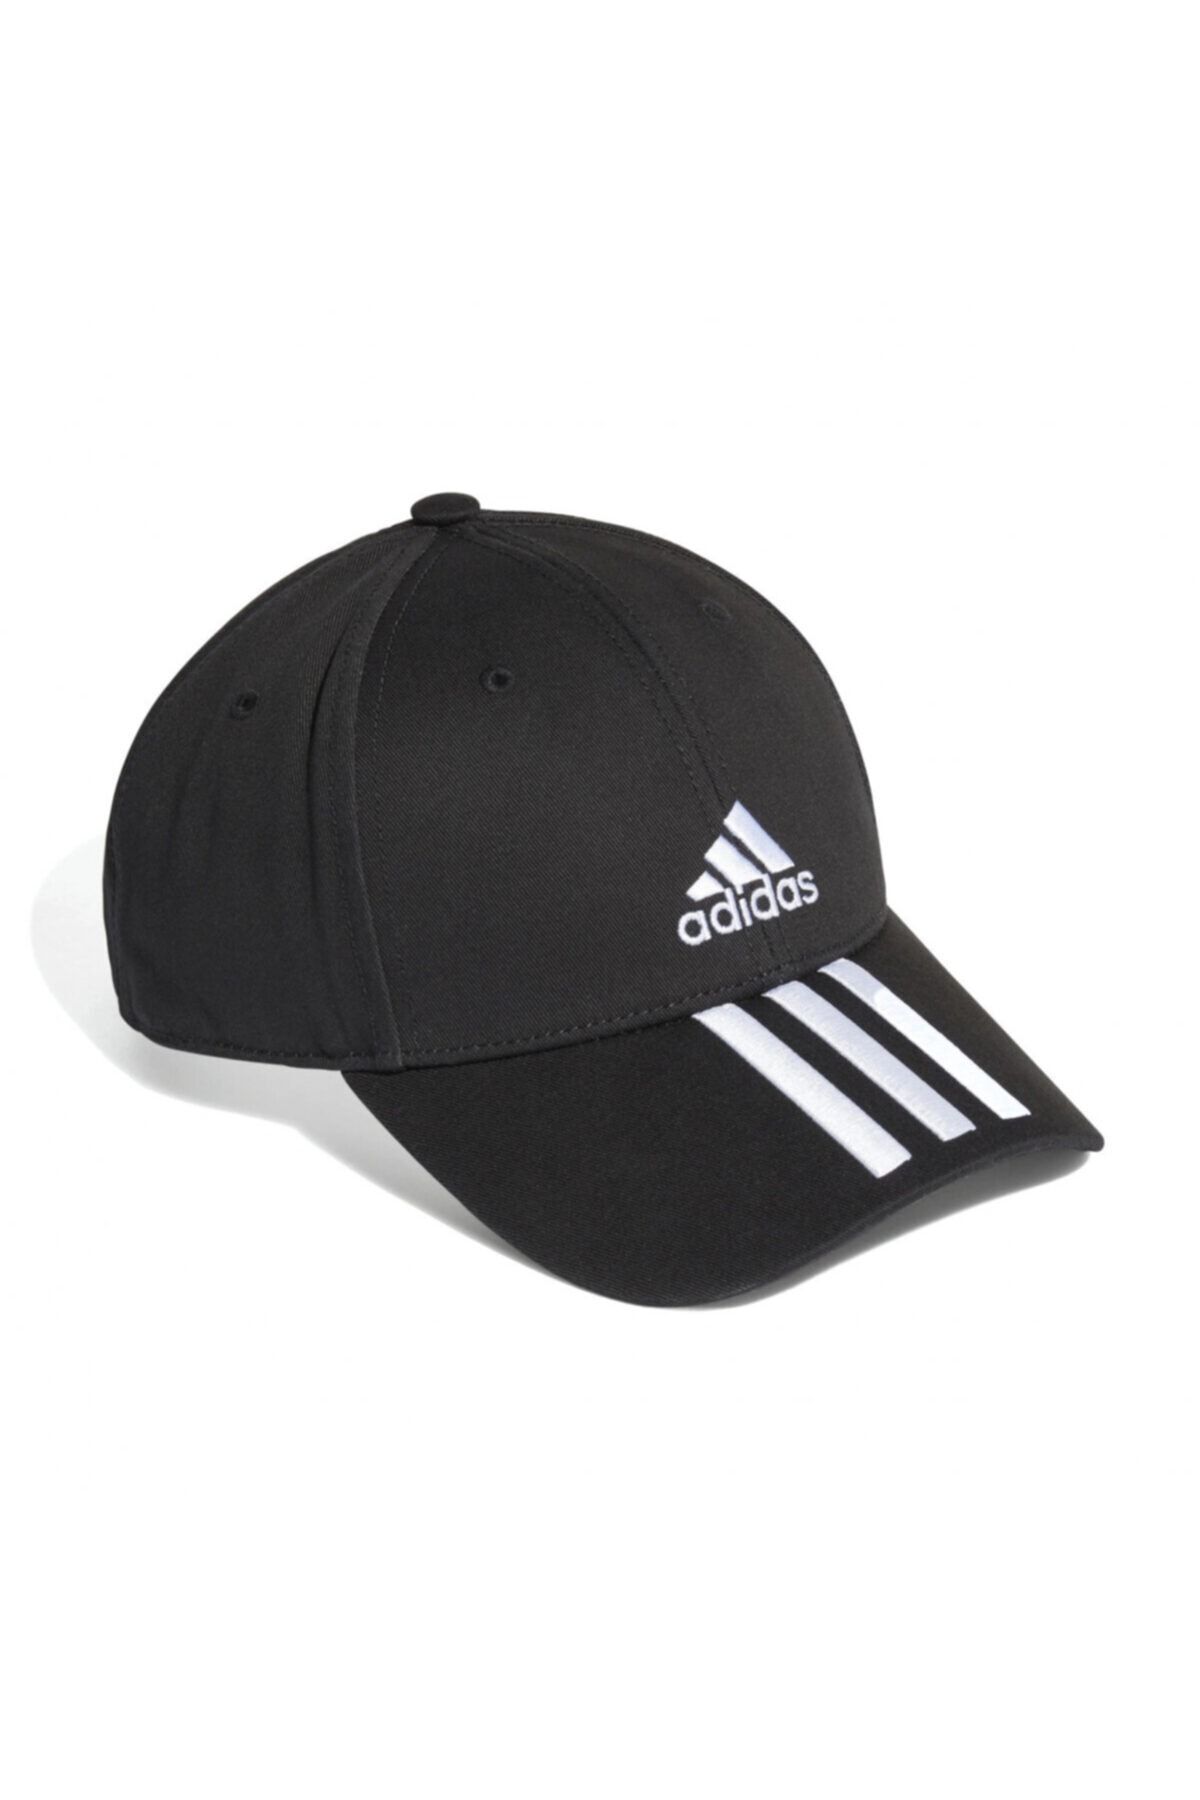 adidas BBALL 3S CAP CT Siyah Erkek Şapka 101069068